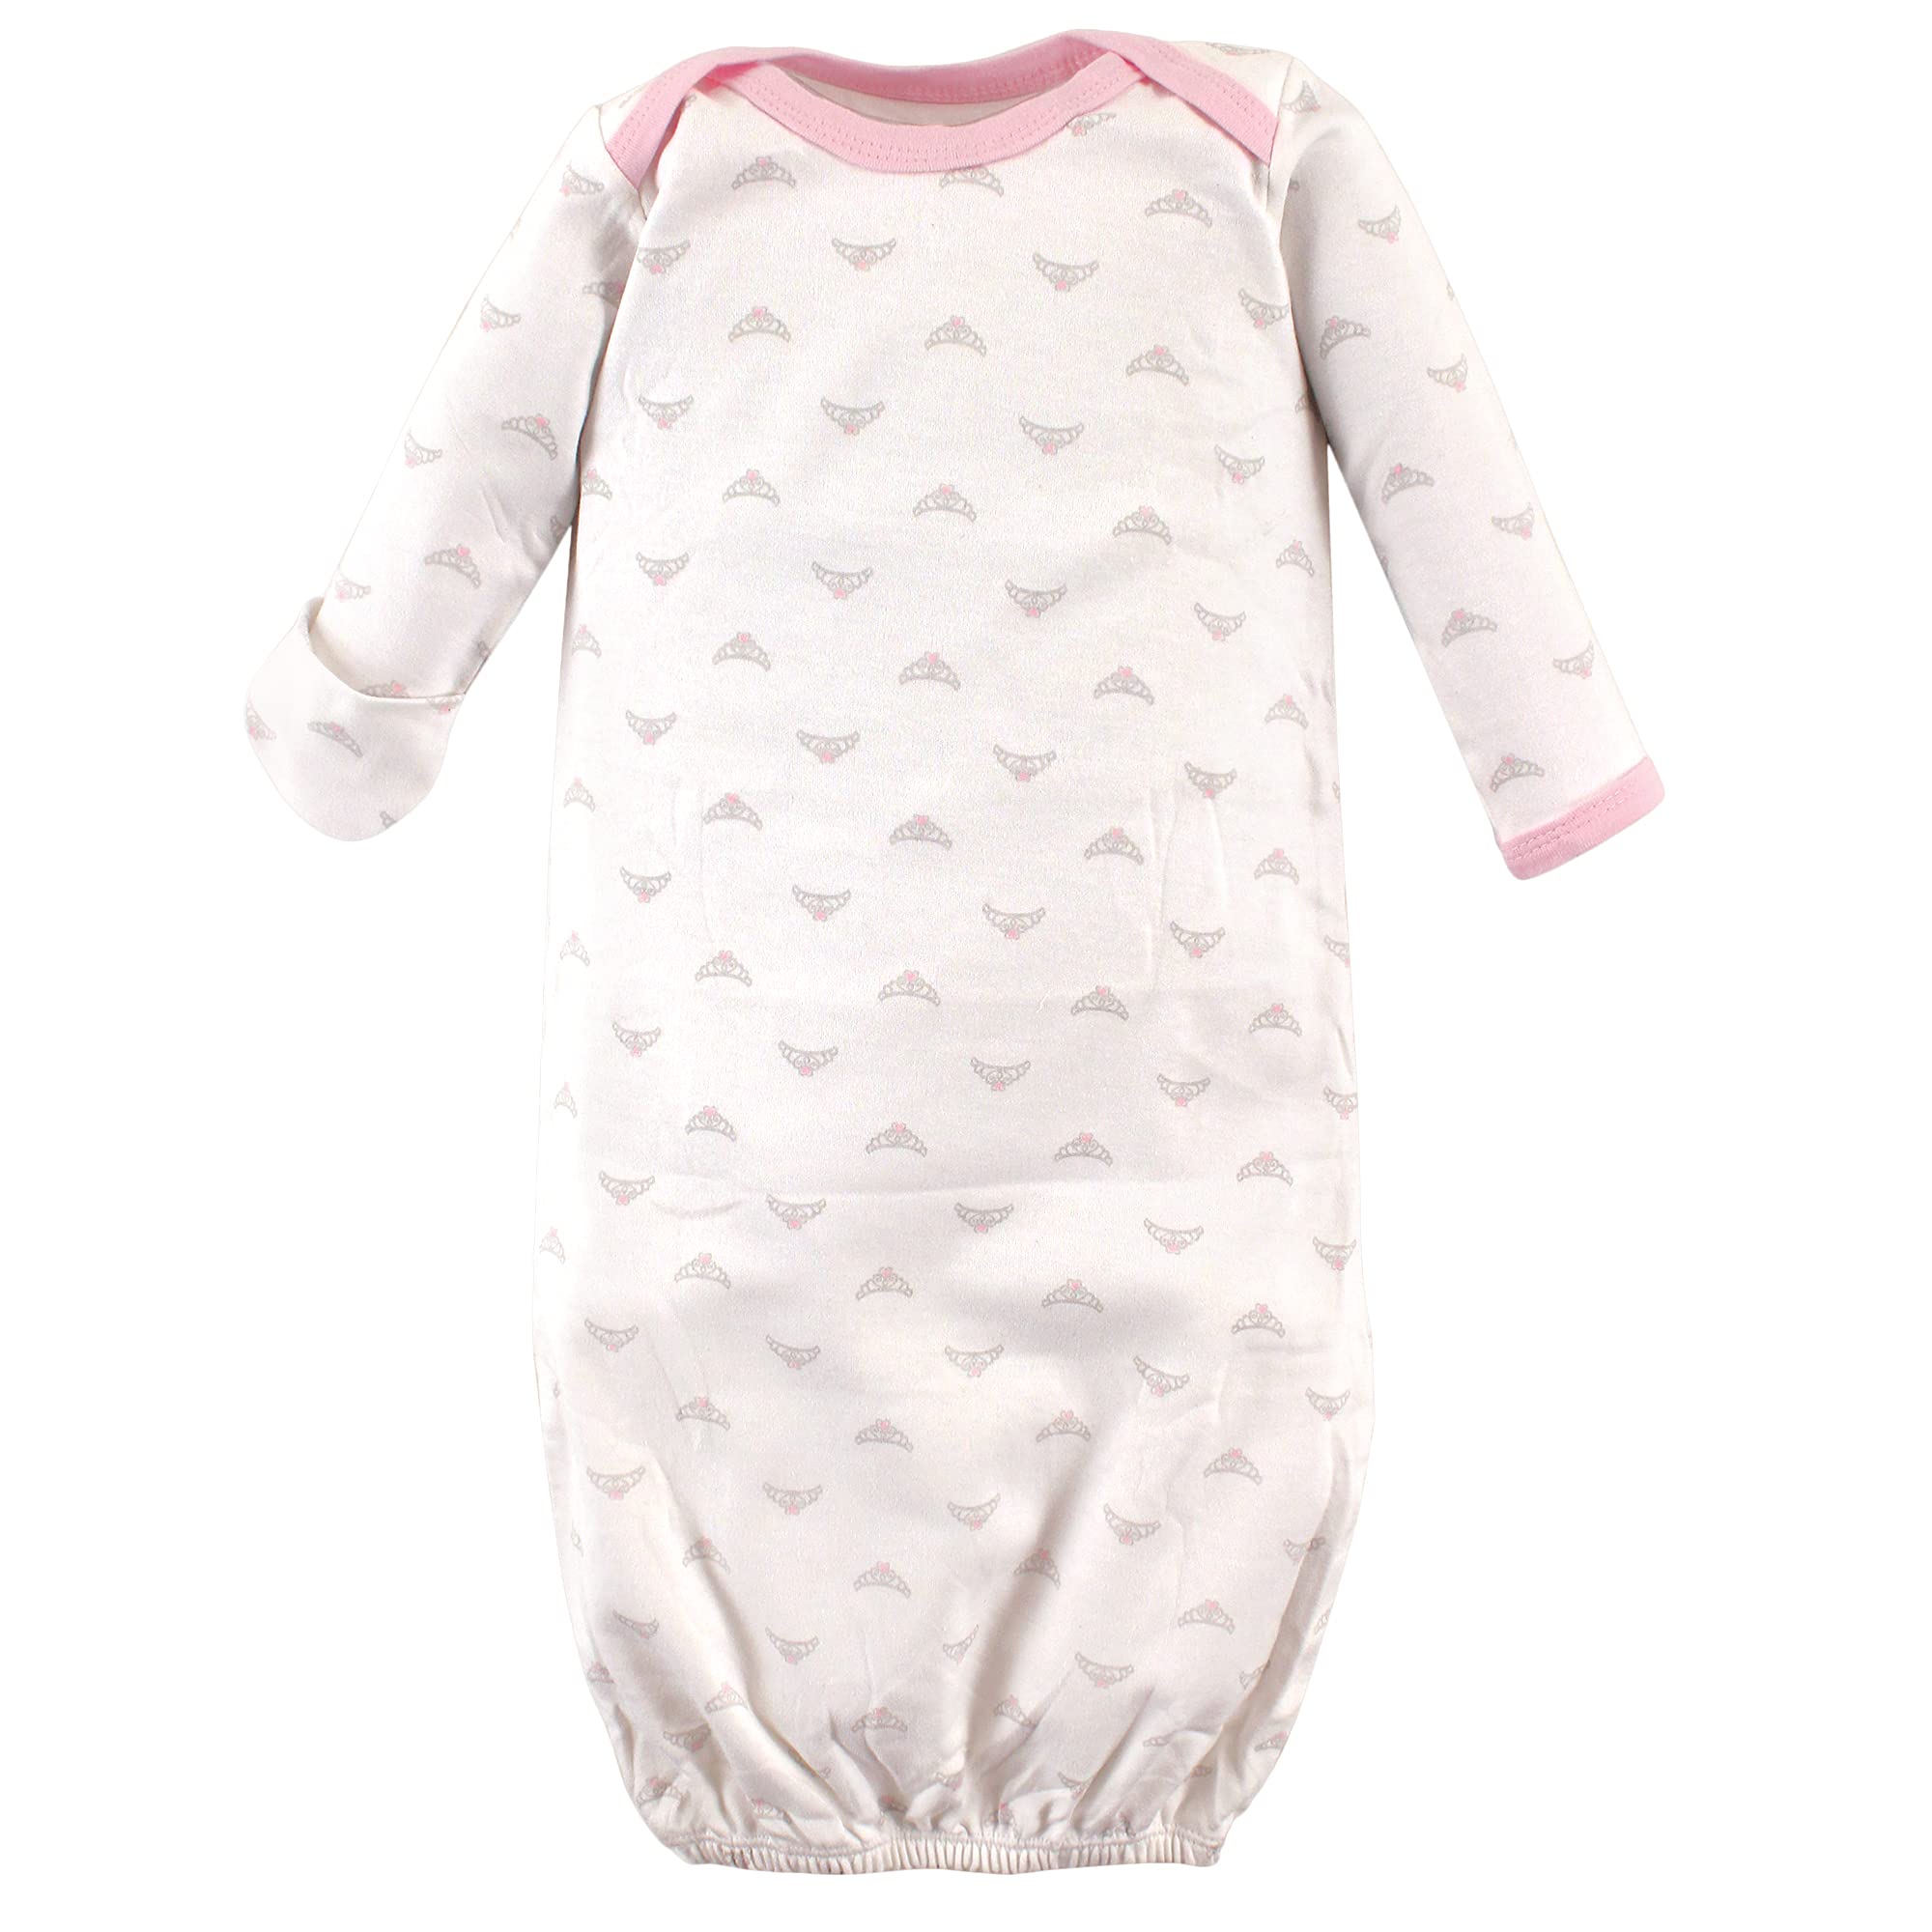 Luvable Friends Unisex Baby Cotton Gowns, Tiara, 0-6 Months US